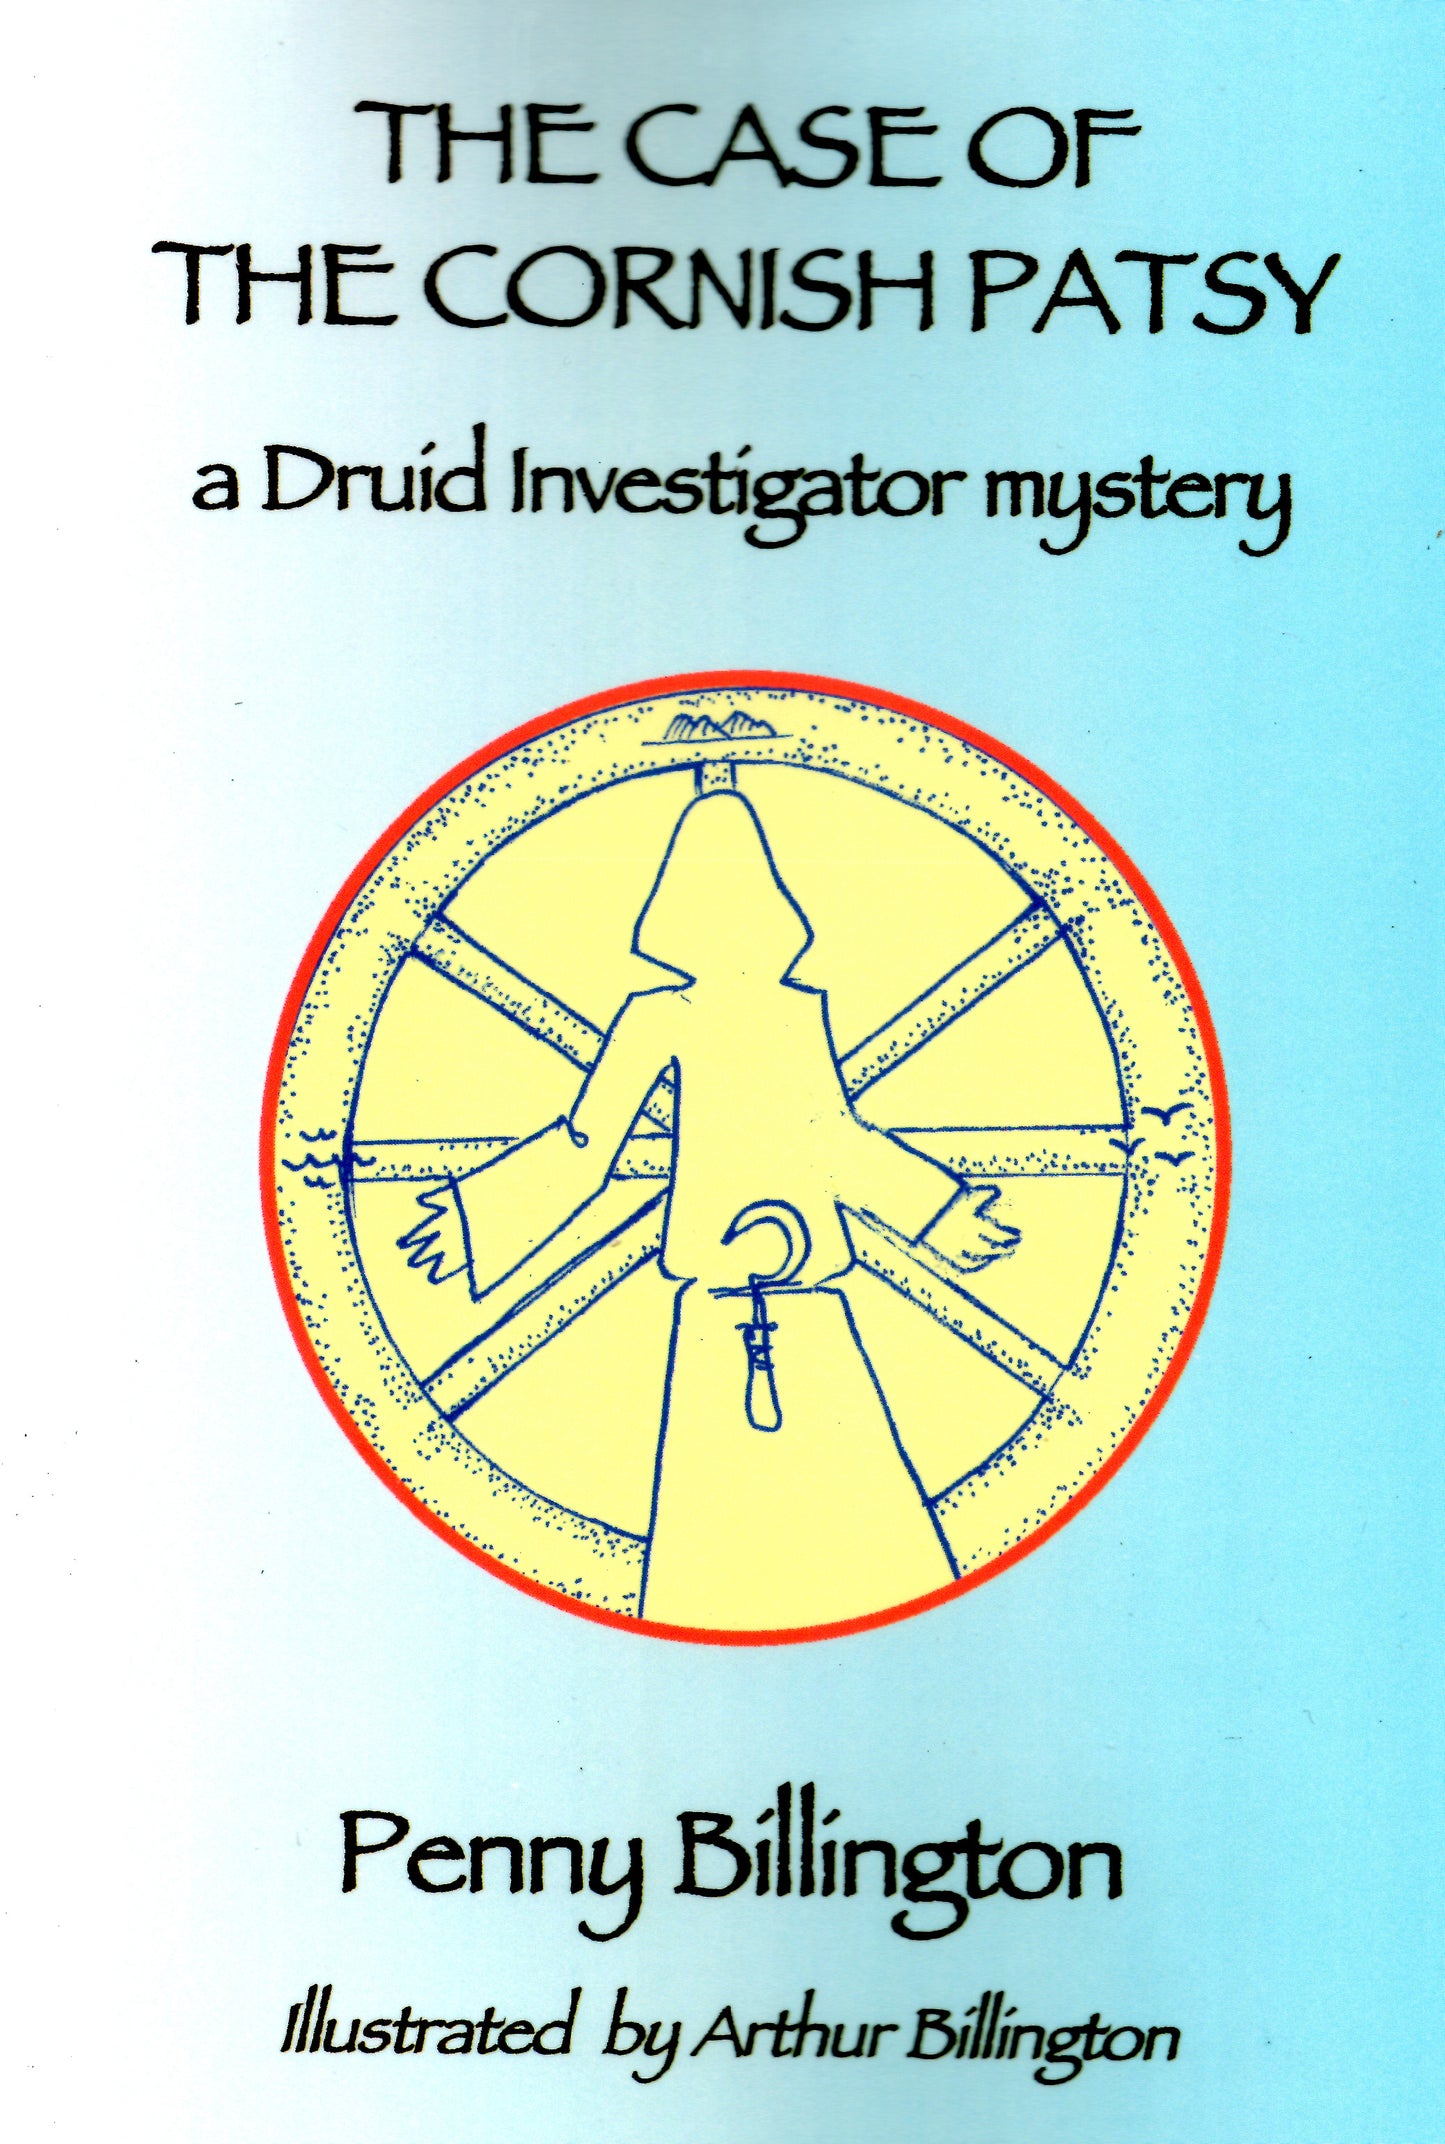 The case of the Cornish Patsy: a Druid Investigator mystery by Penny Billington